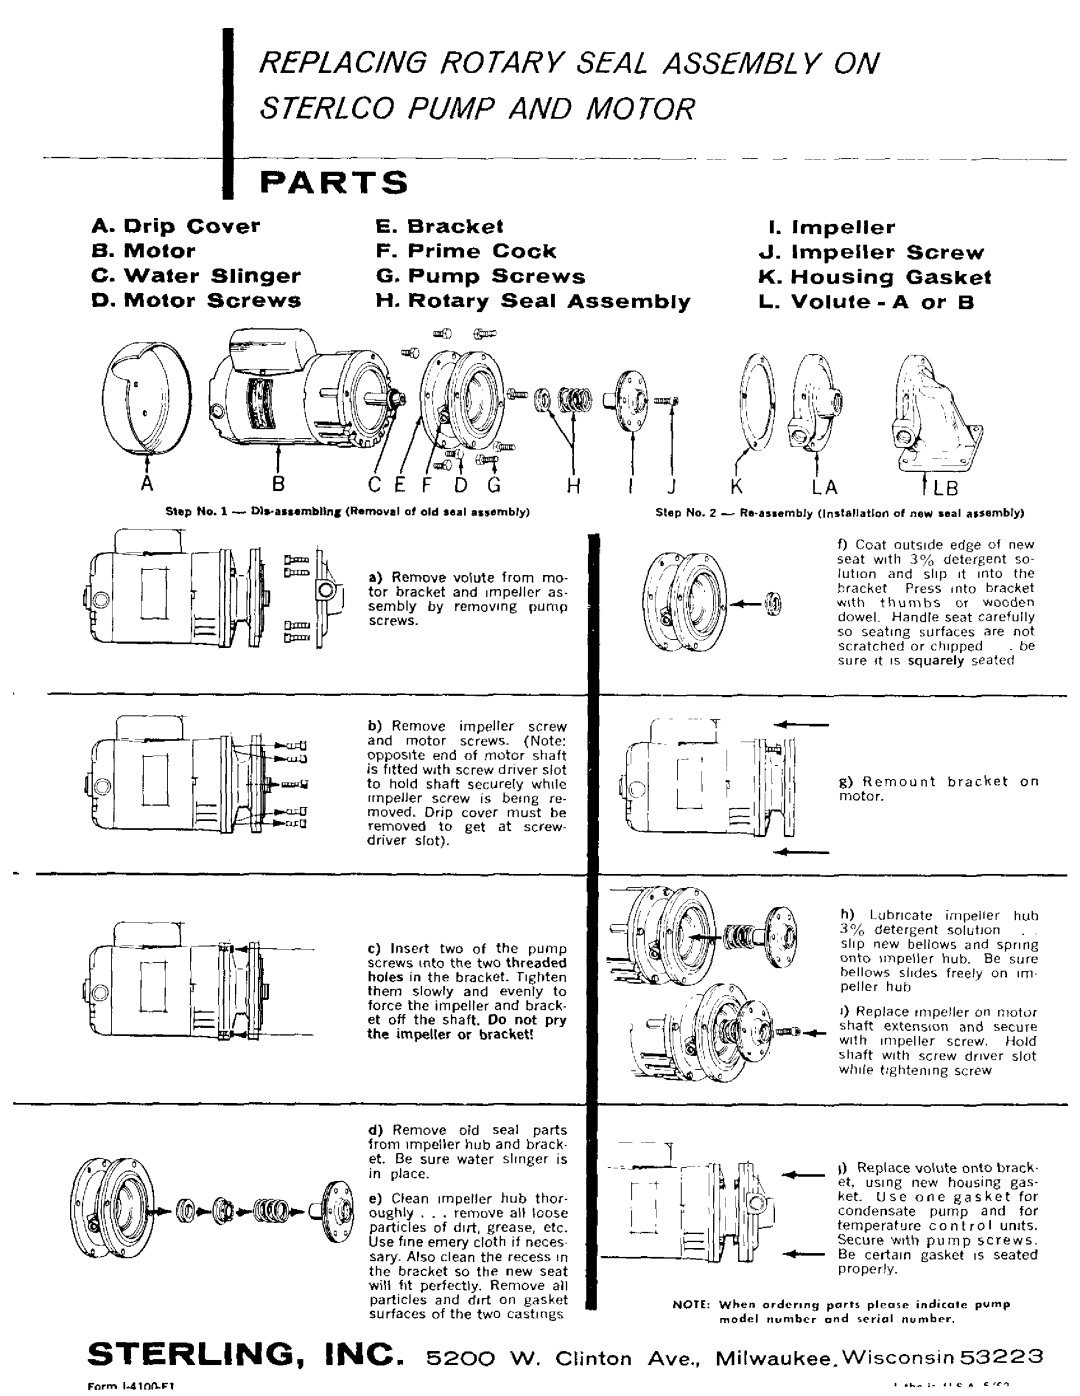 Sterling M-8433, M-8423, M-8413 manual 